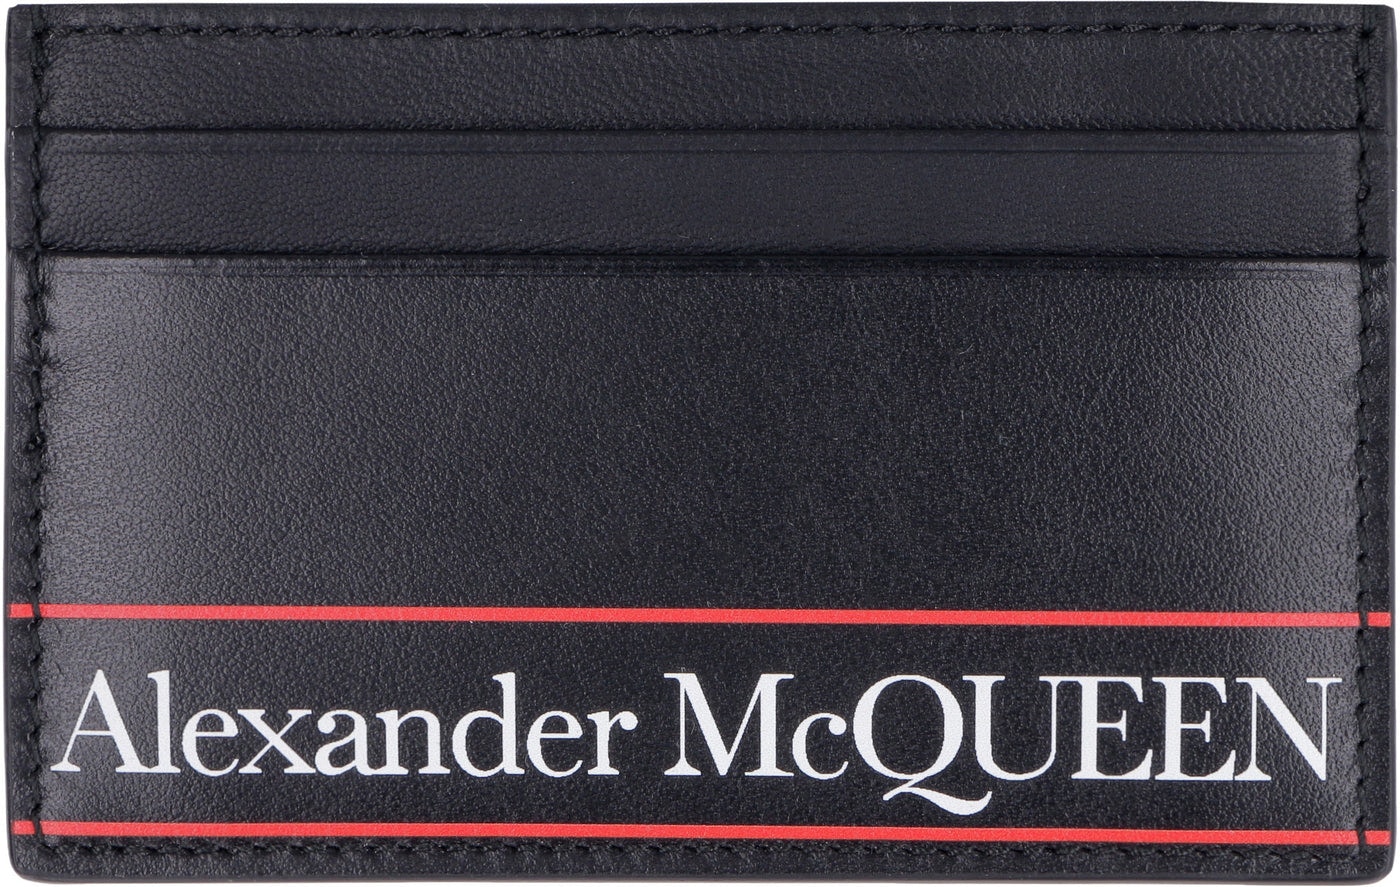 1092 ALEXANDER MCQUEEN LEATHER CARD HOLDER